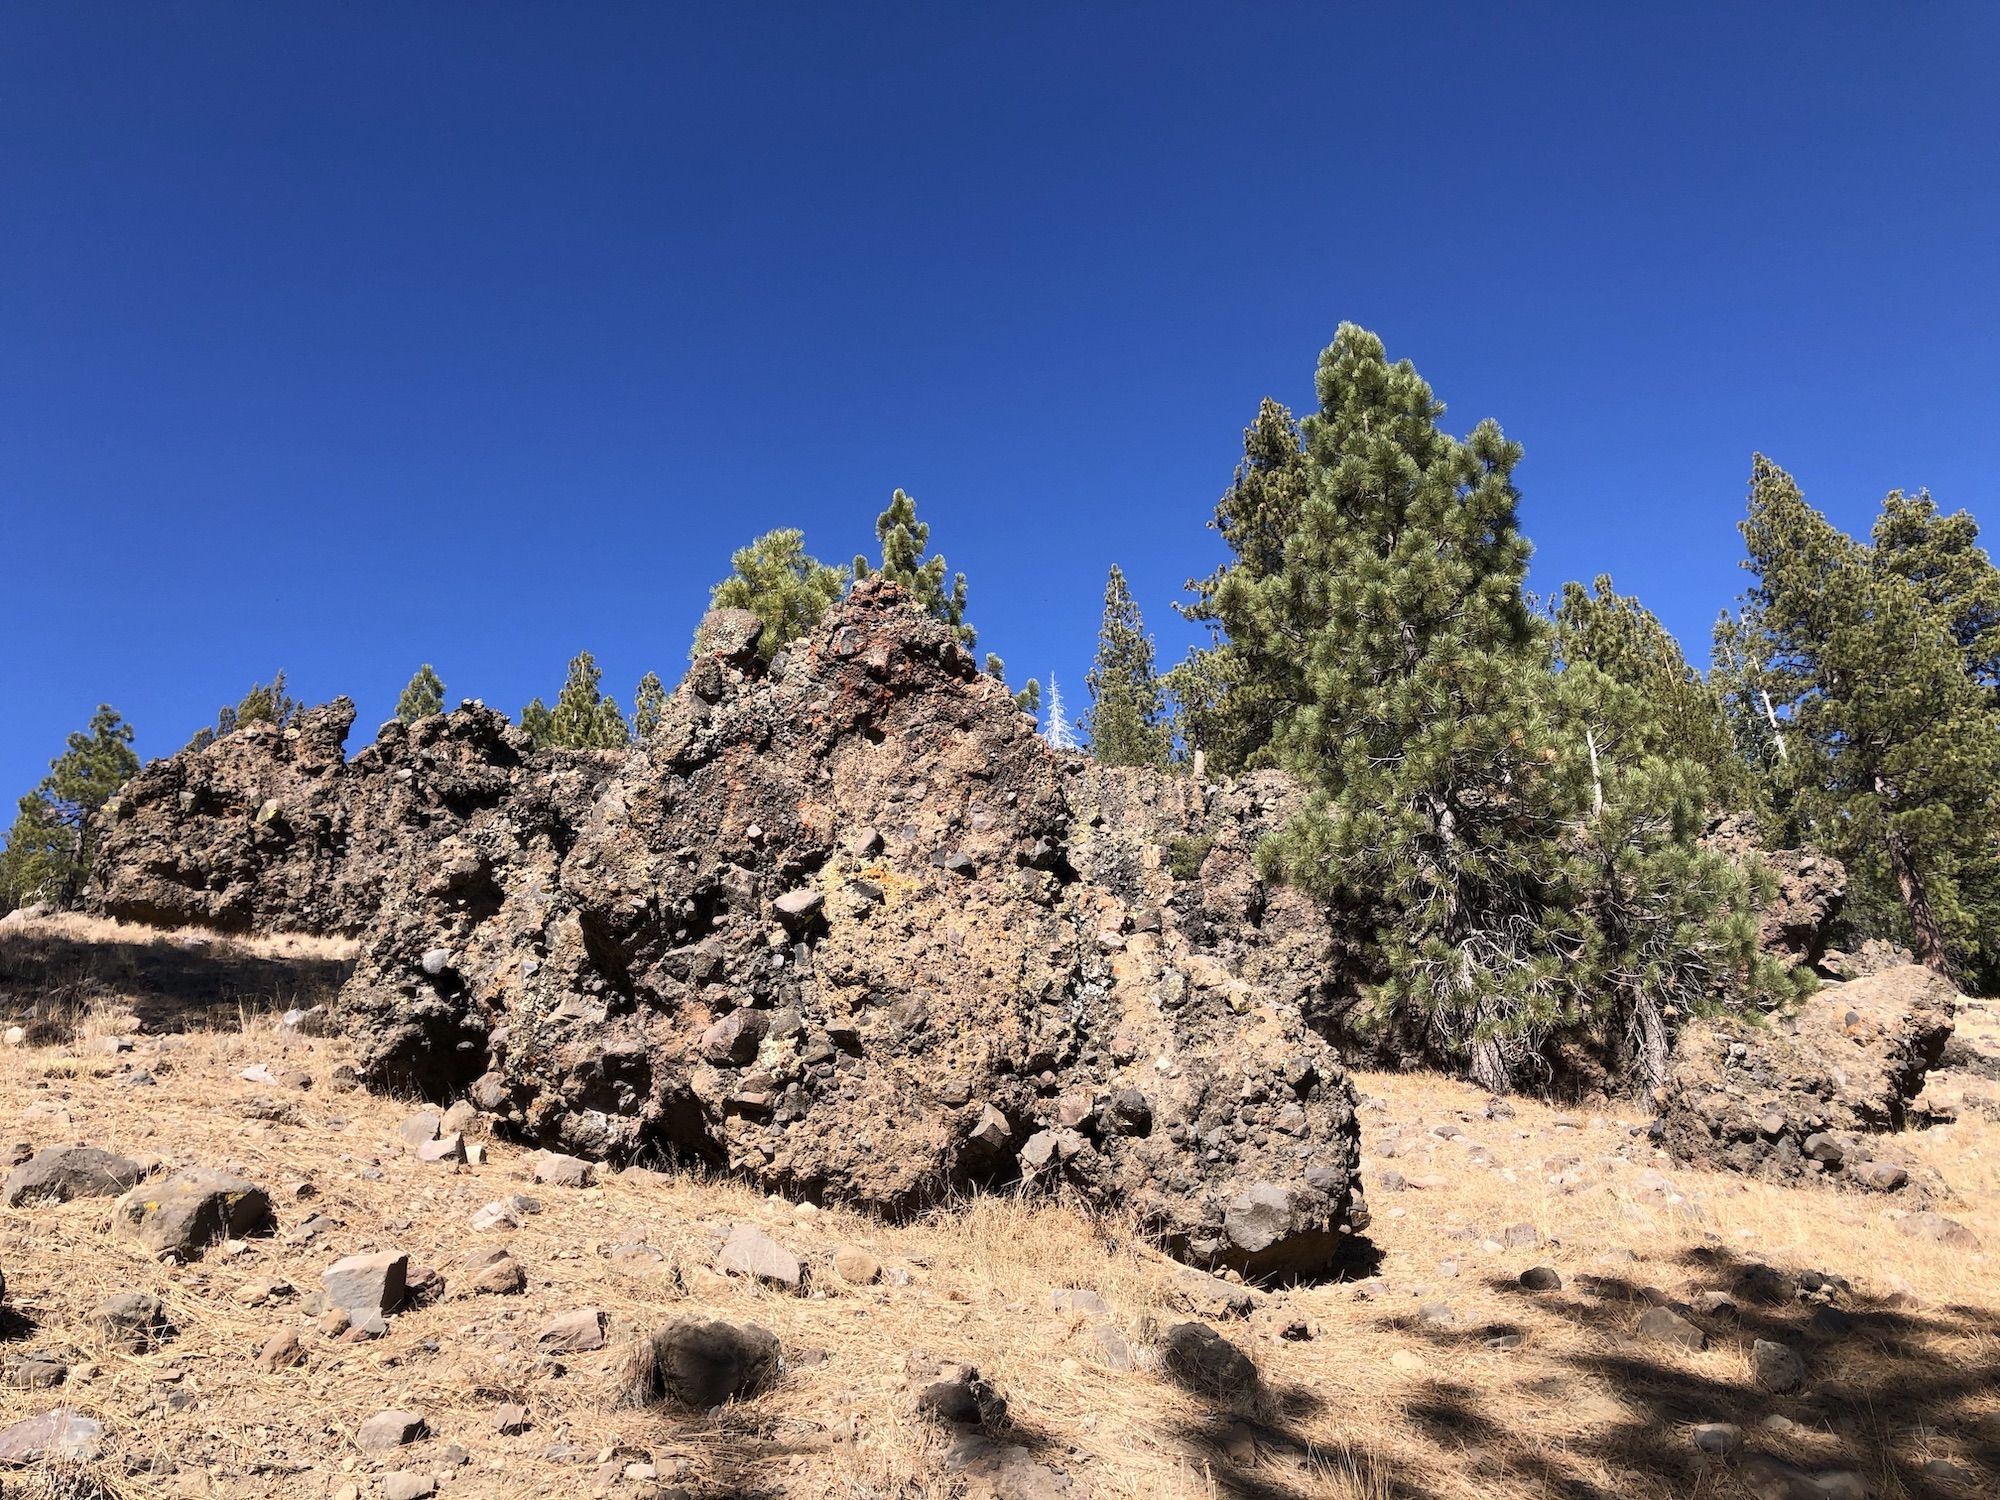 Large boulders of lavarock that has smaller rocks embedded in it.